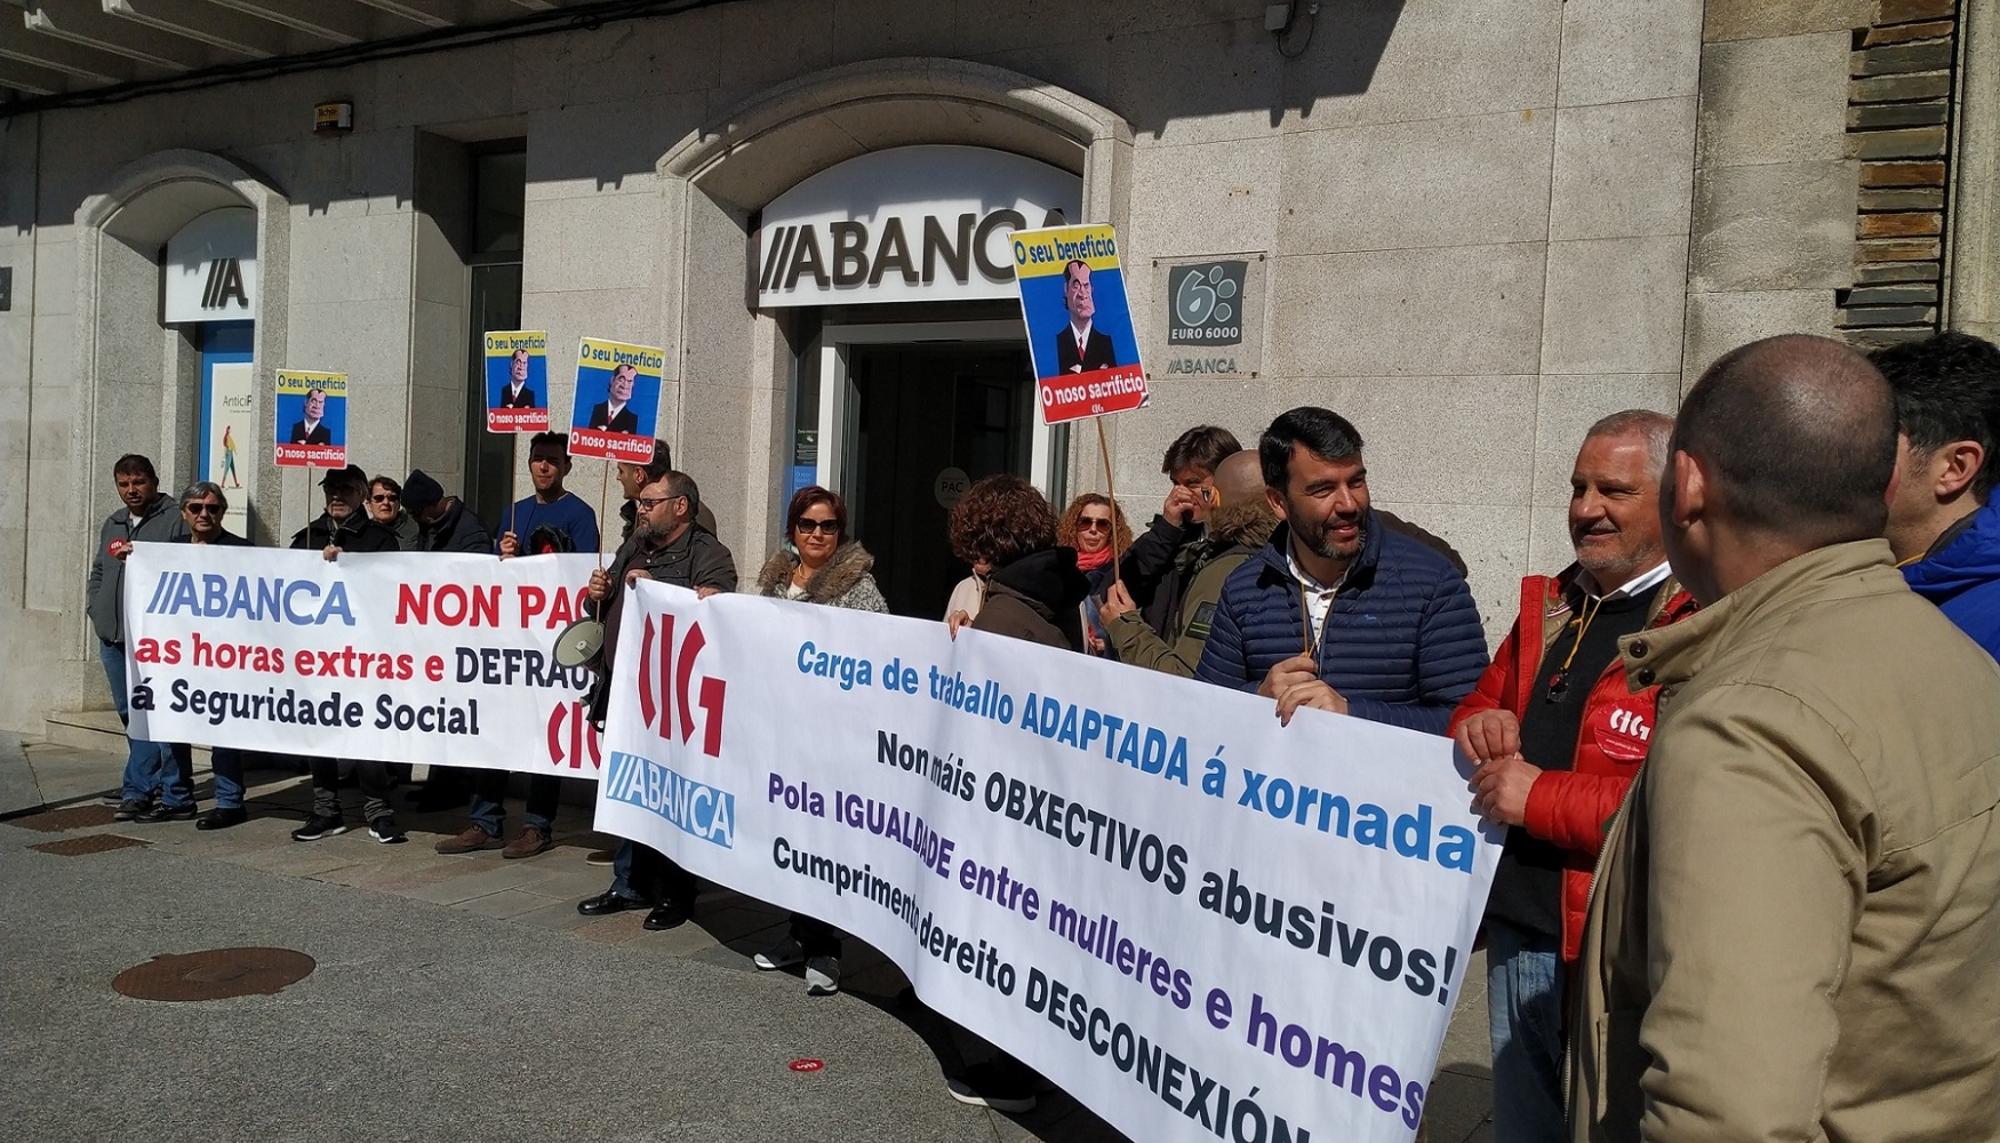 Protestas da CIG ante Abanca